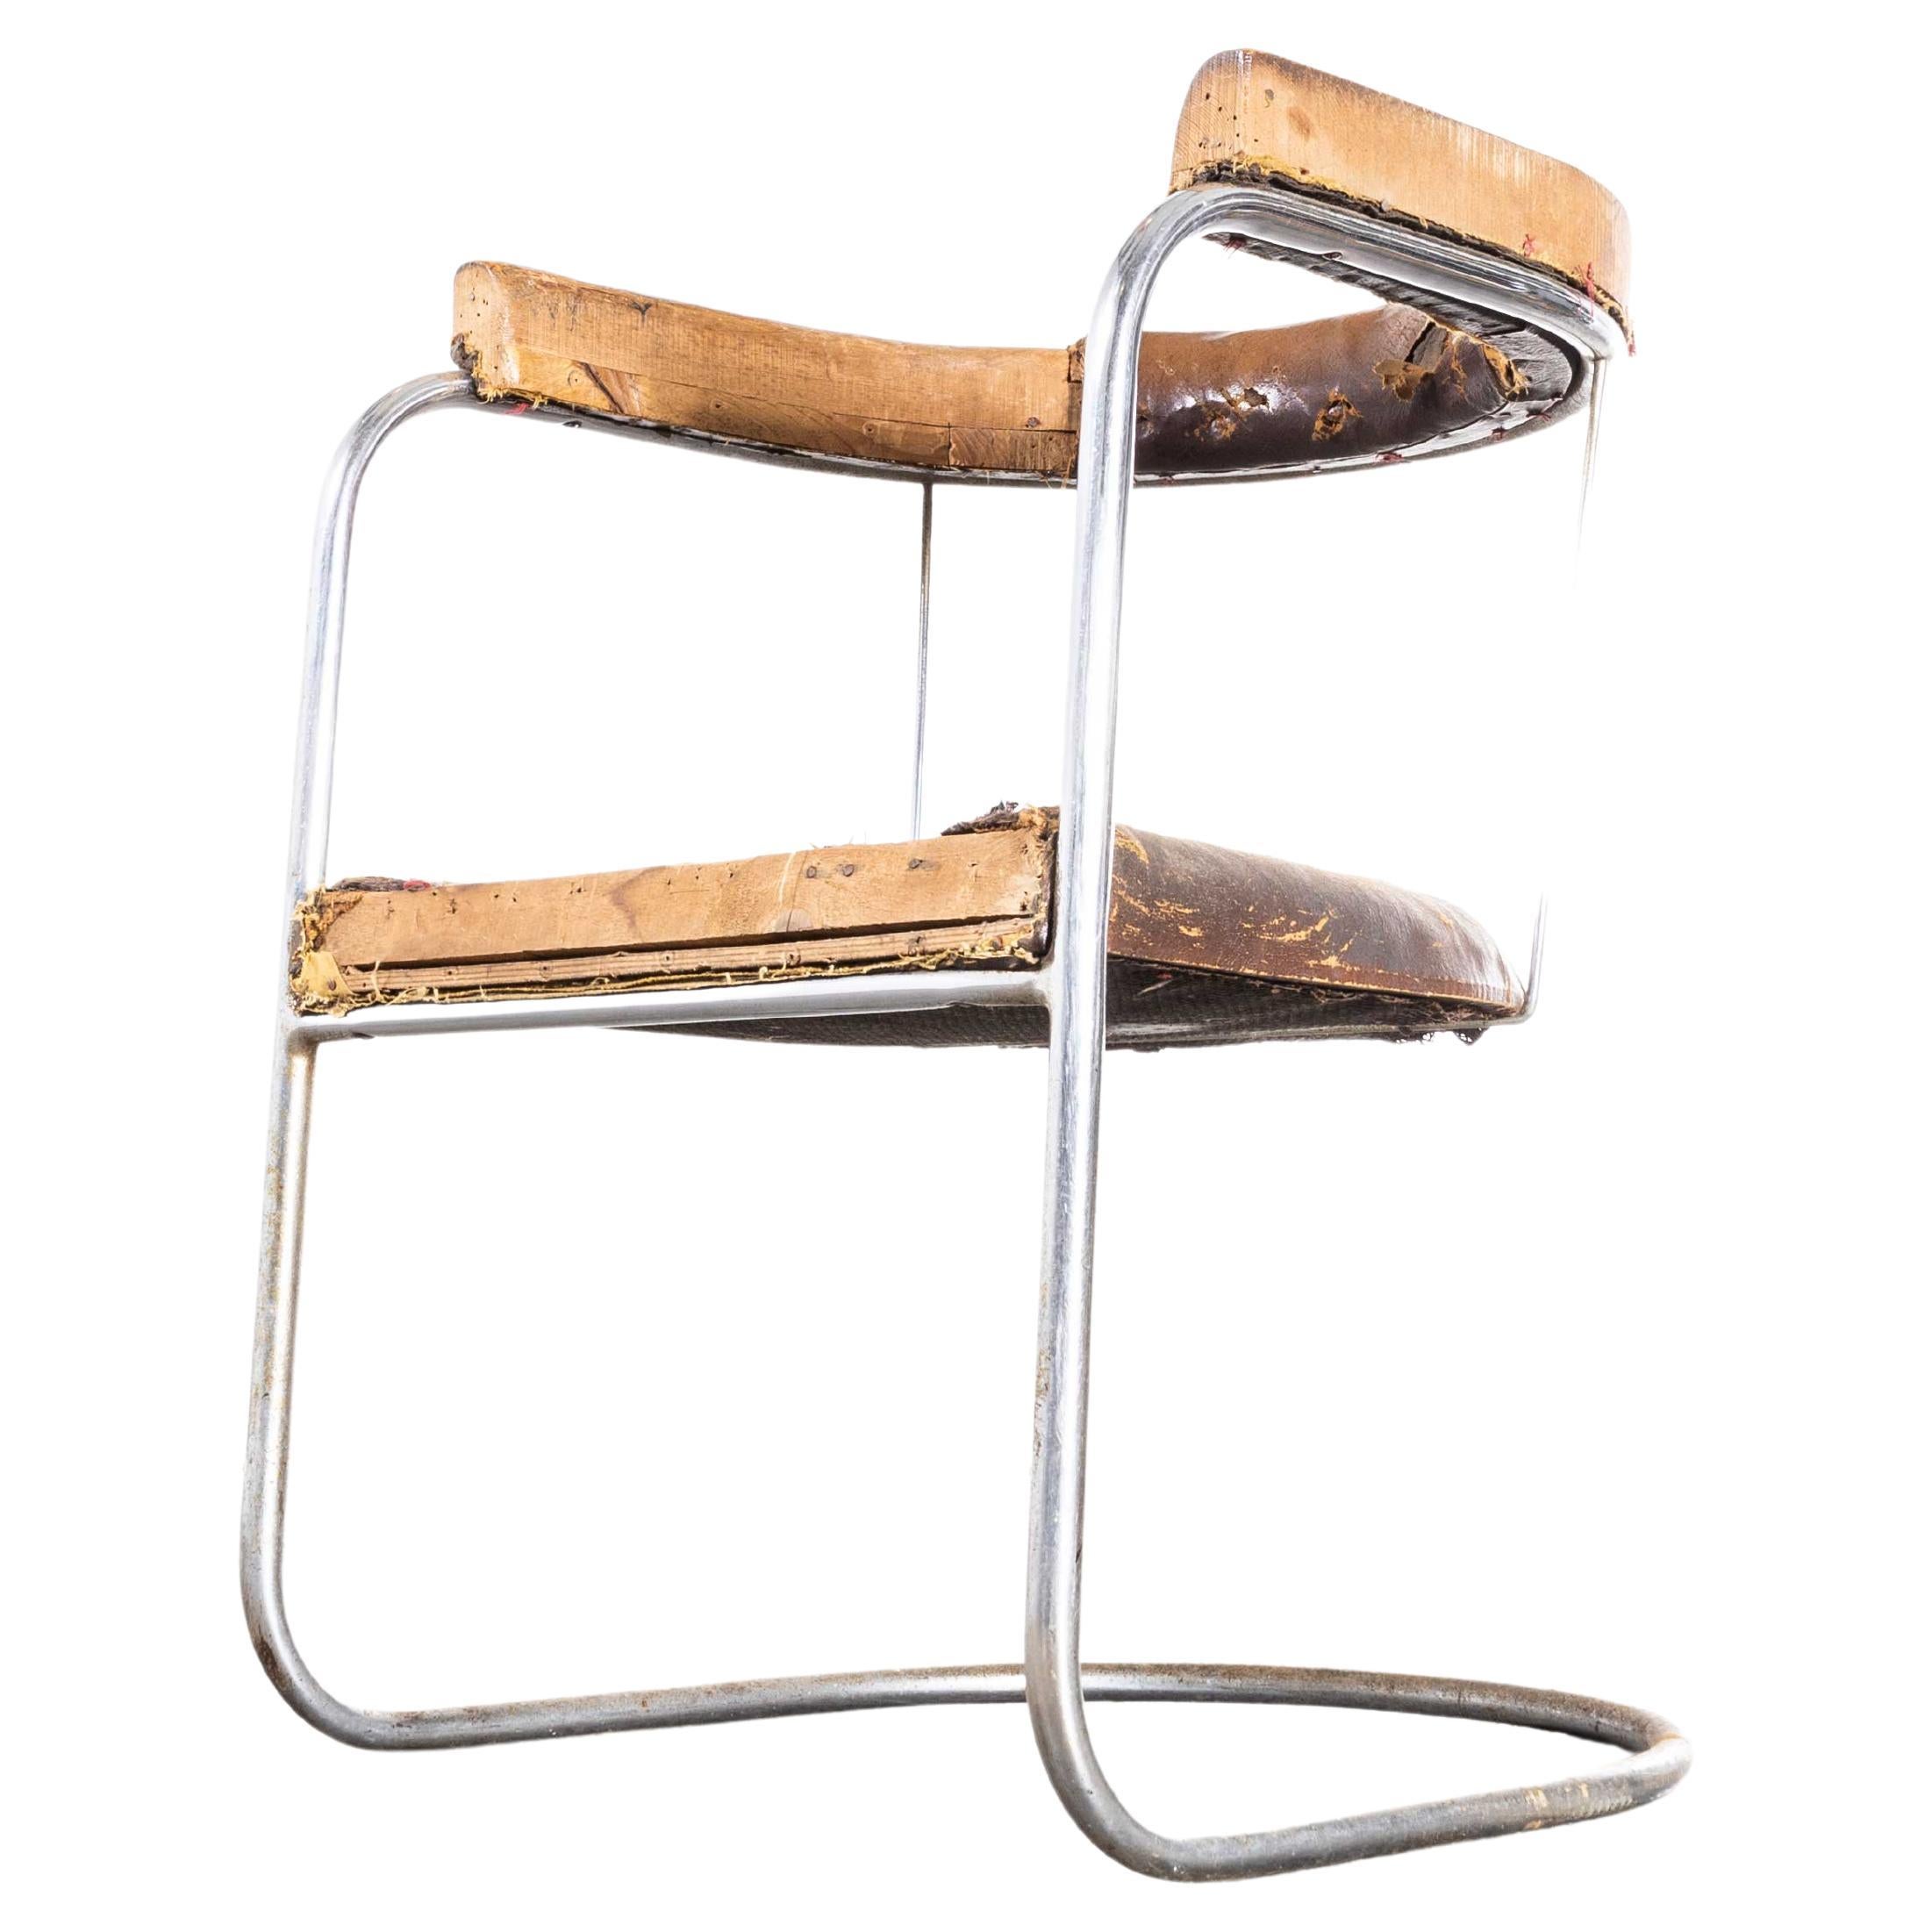 1930s Original Pel Tubular Chrome Sprung Side Chair – Original Leather For Sale